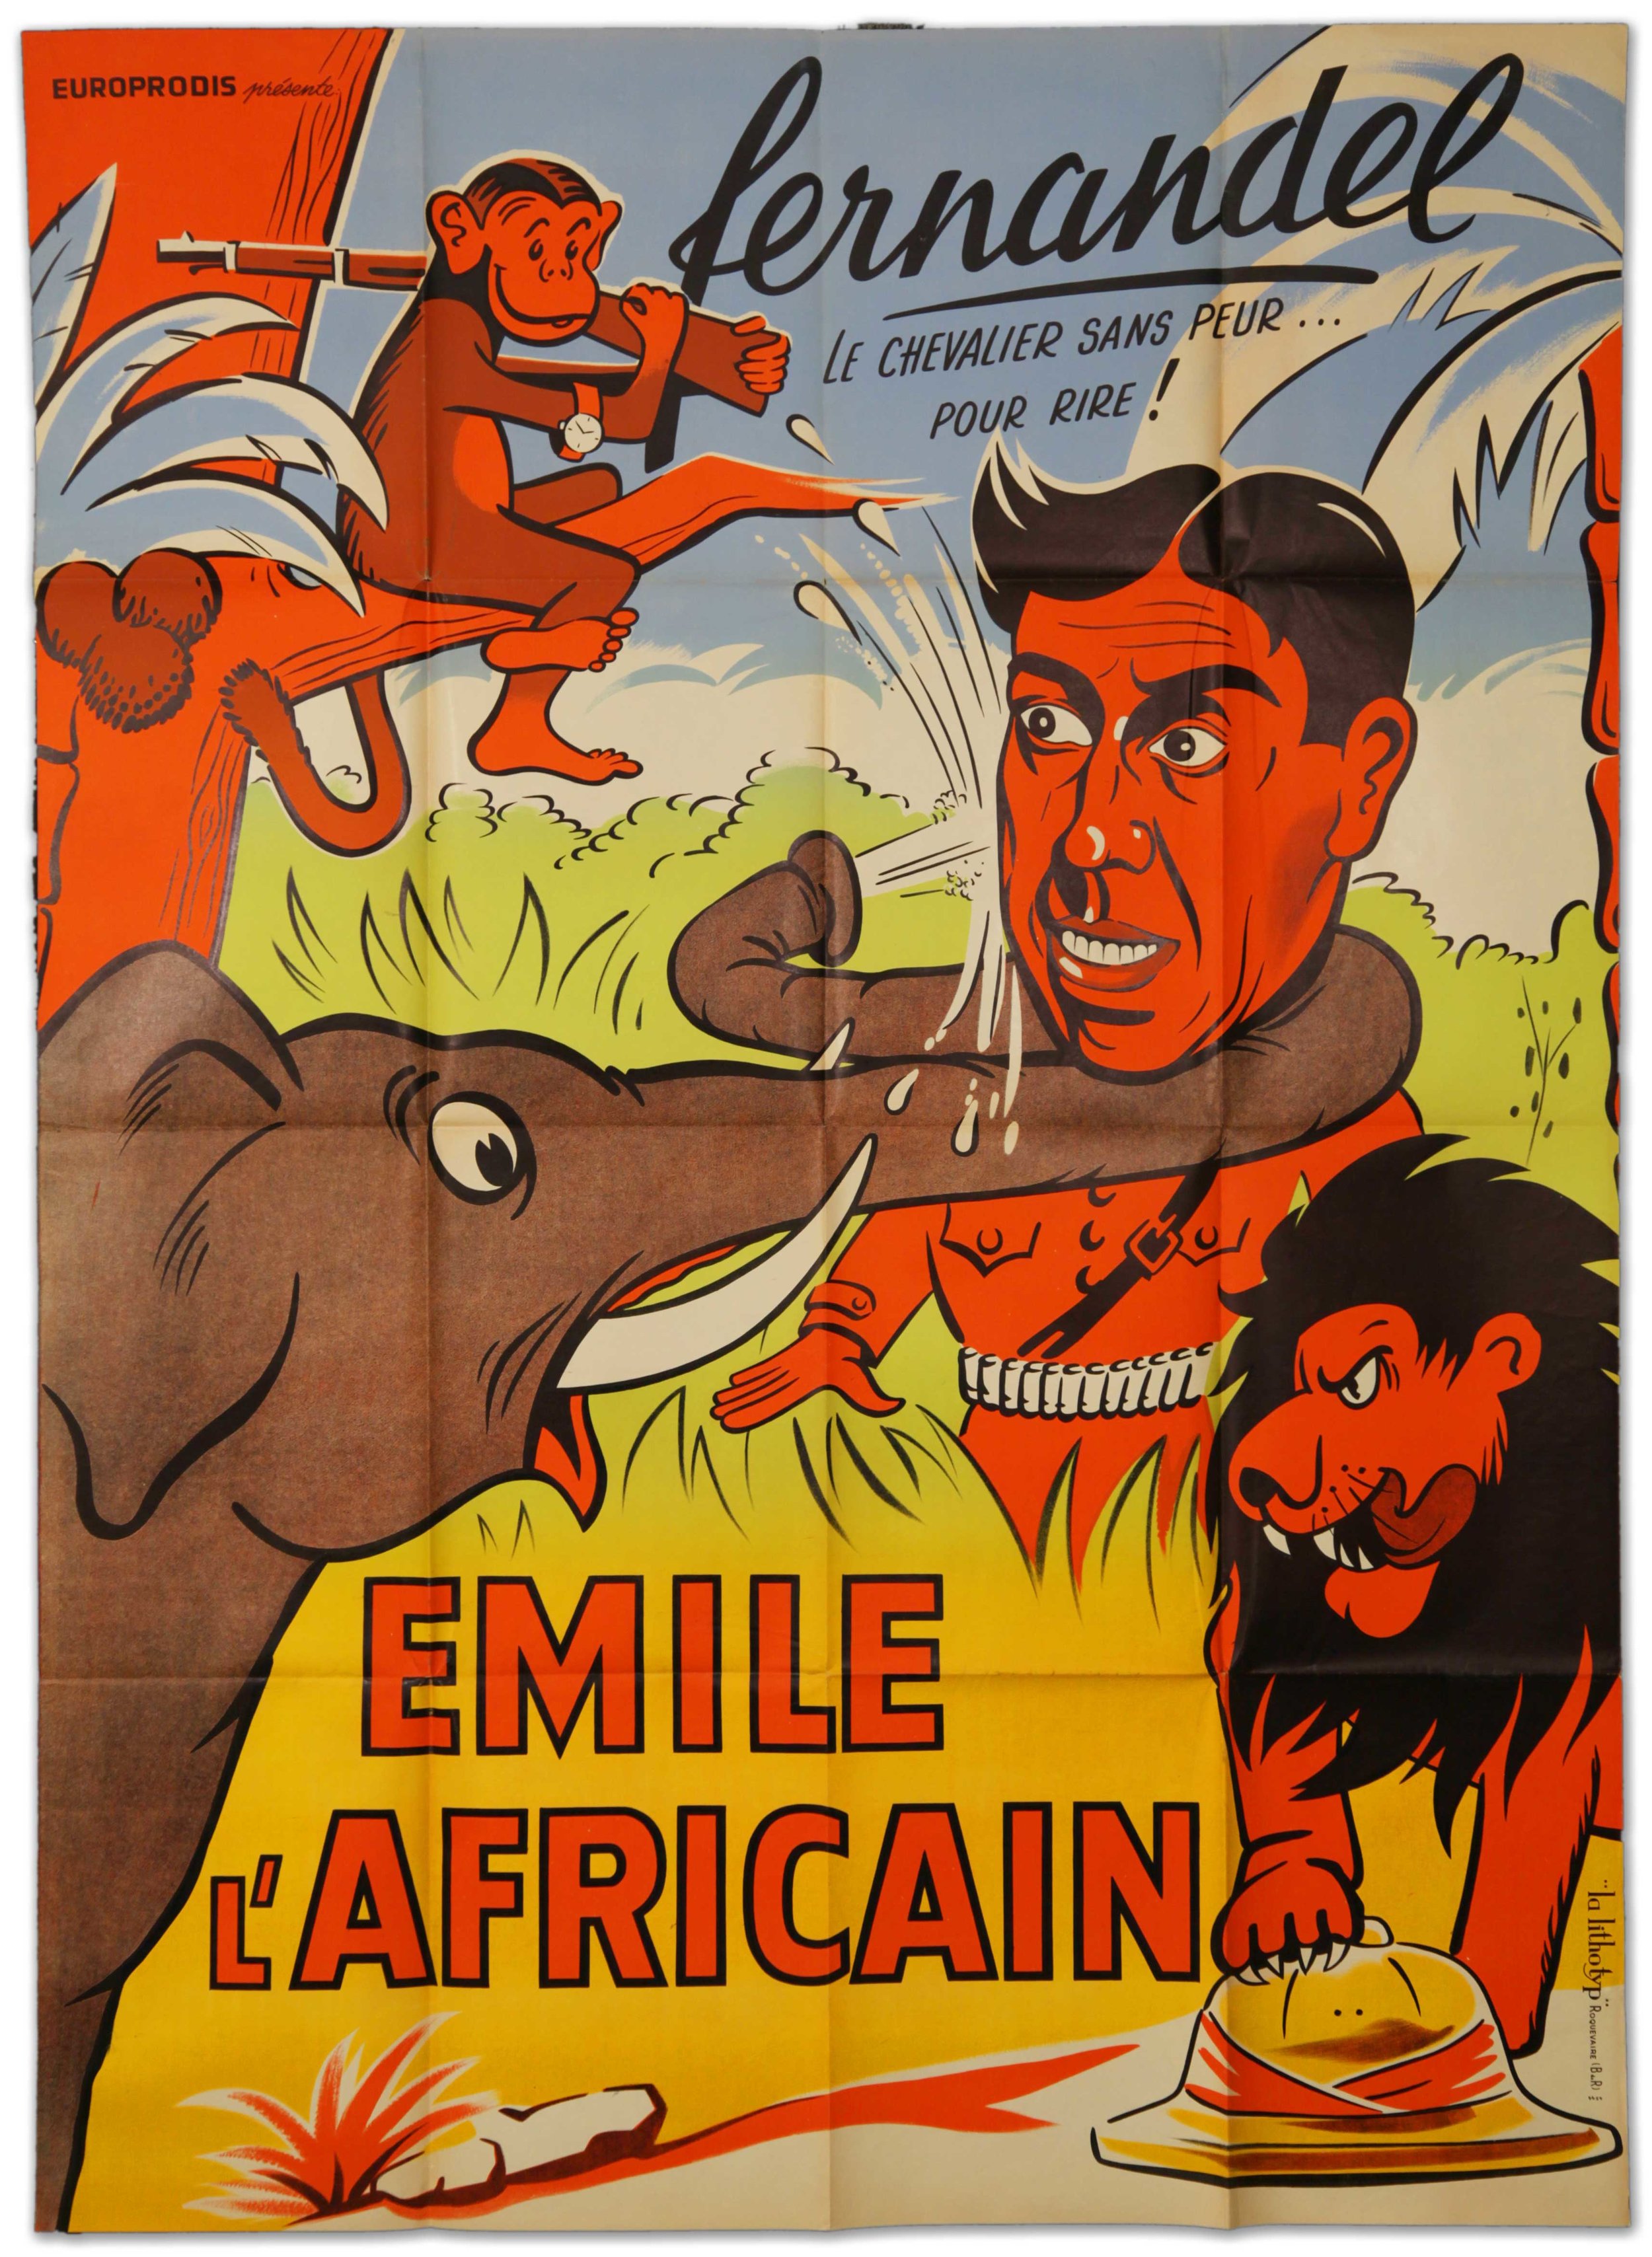 Fernadel in "Emile L'Africain" (1948)